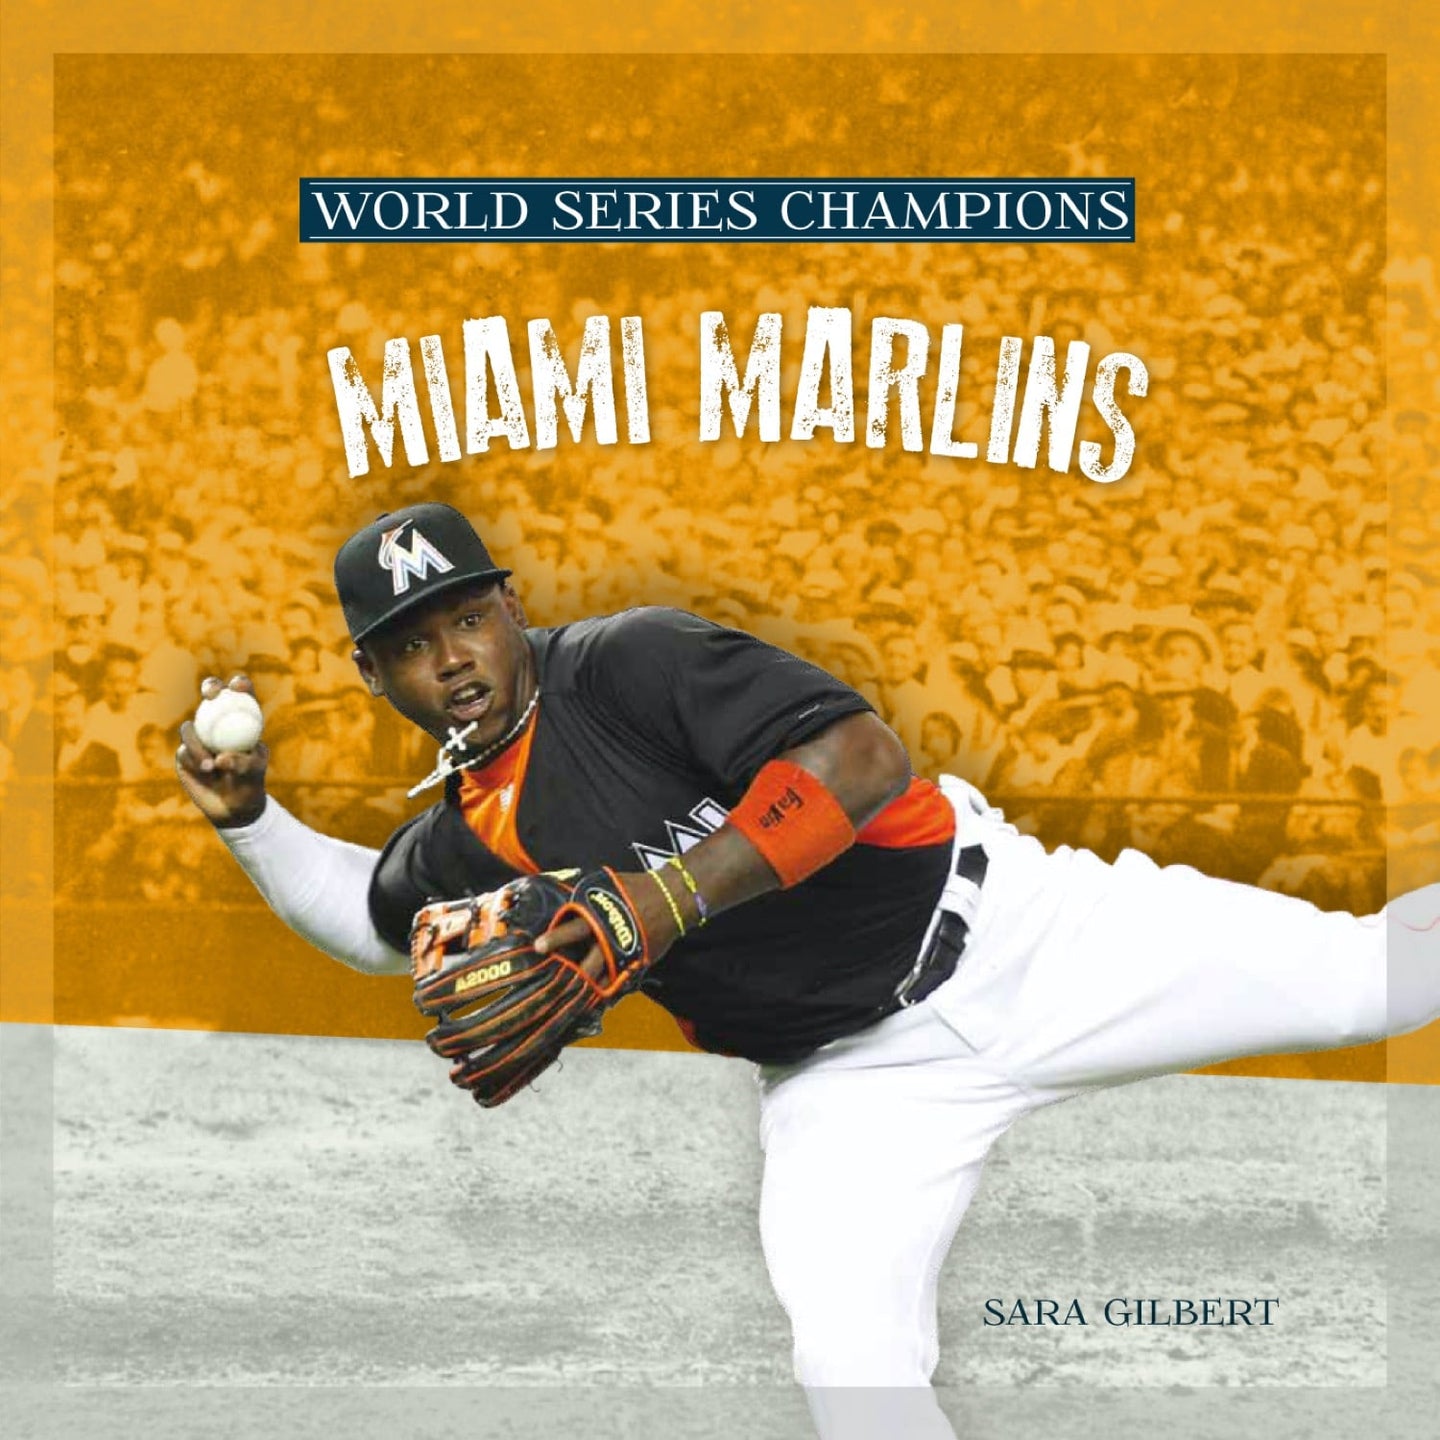 World Series Champs: Miami Marlins [Book]